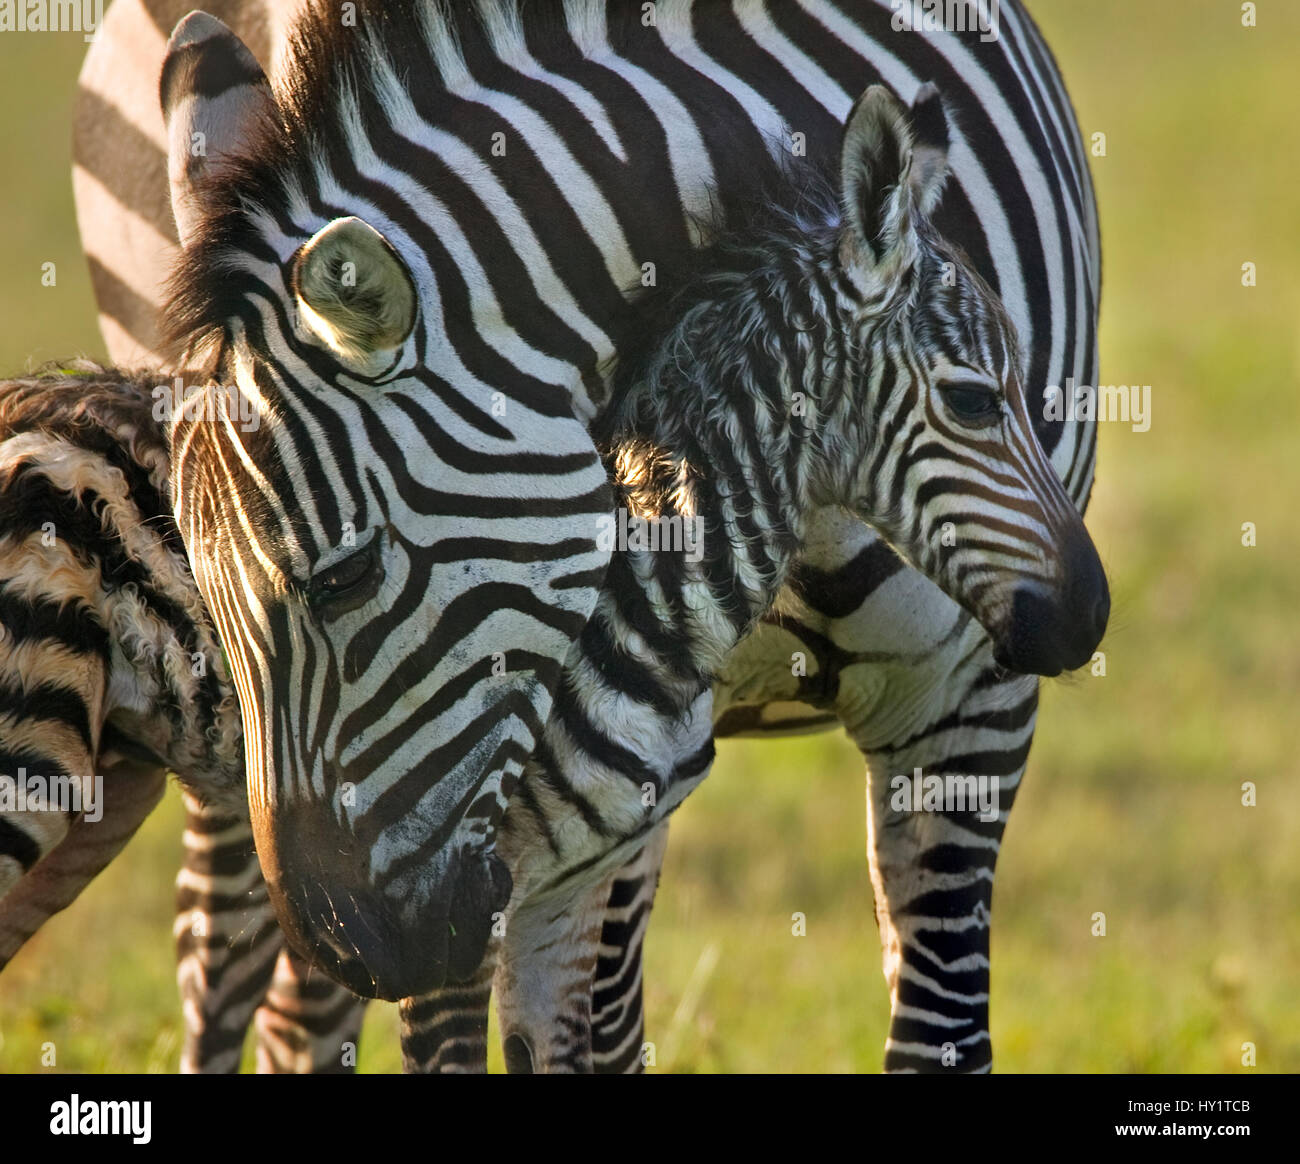 Premium Photo  Zebra foal baby with its long legs